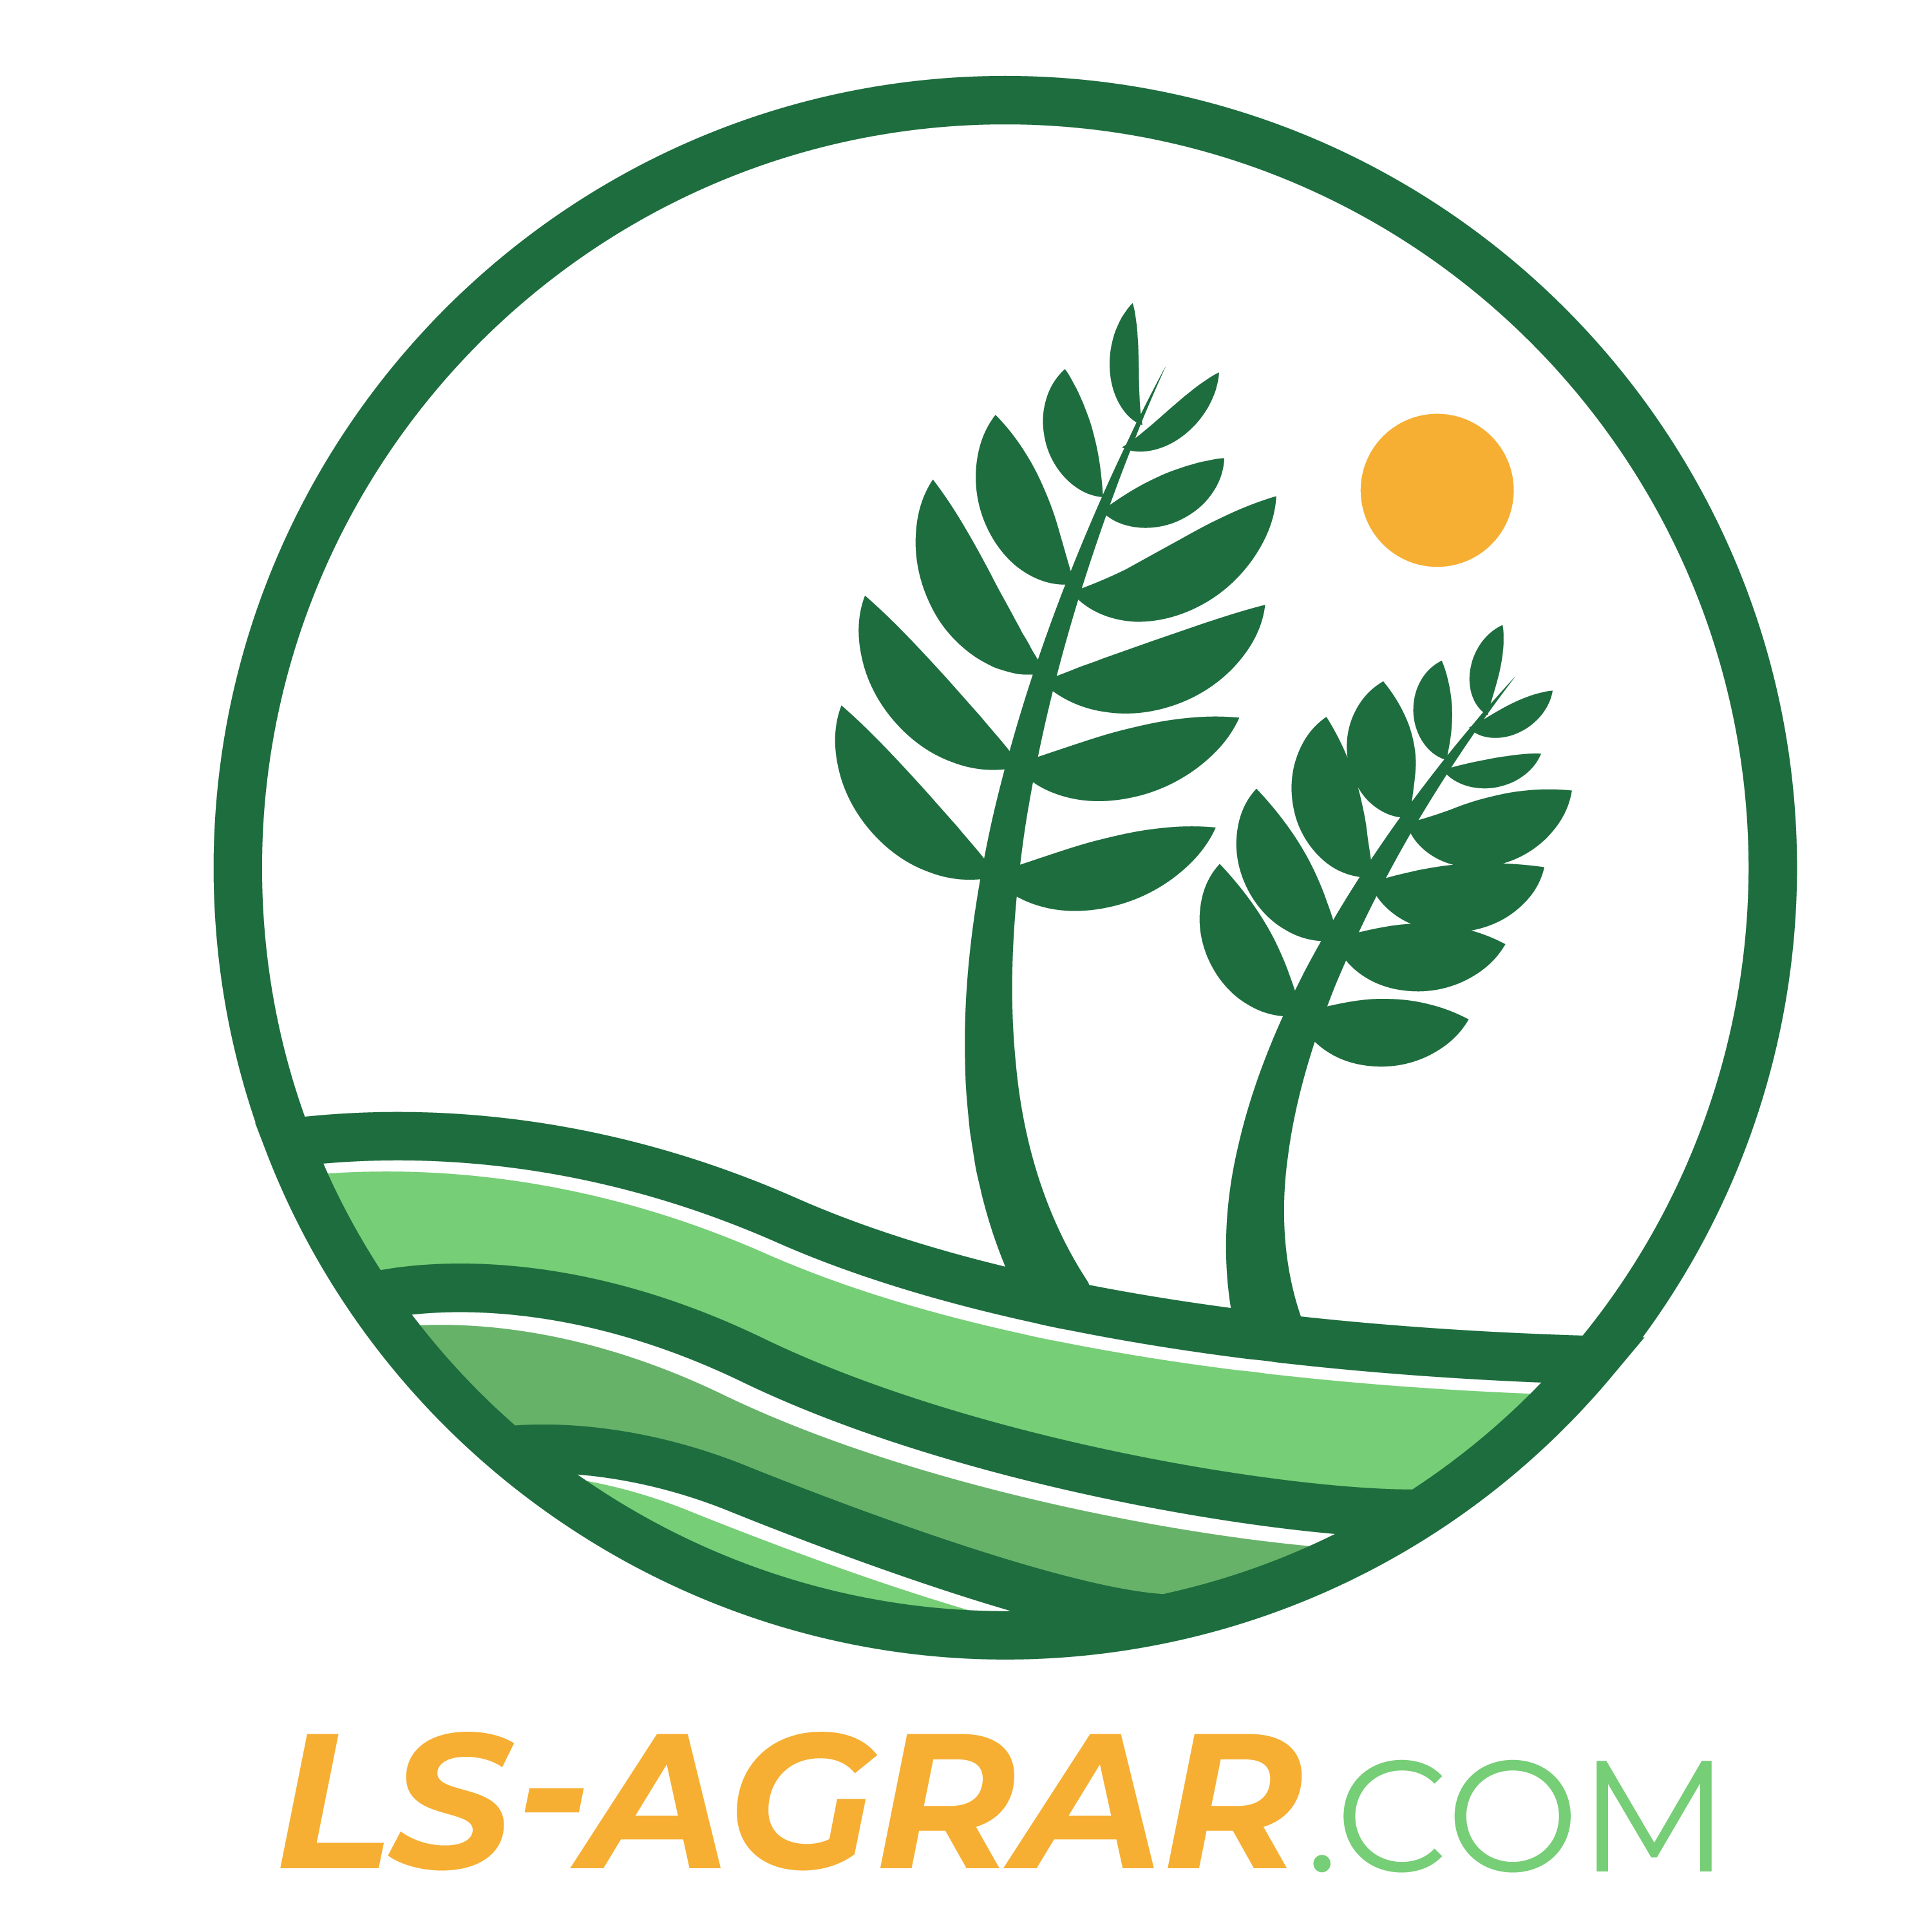 LS-Agrar